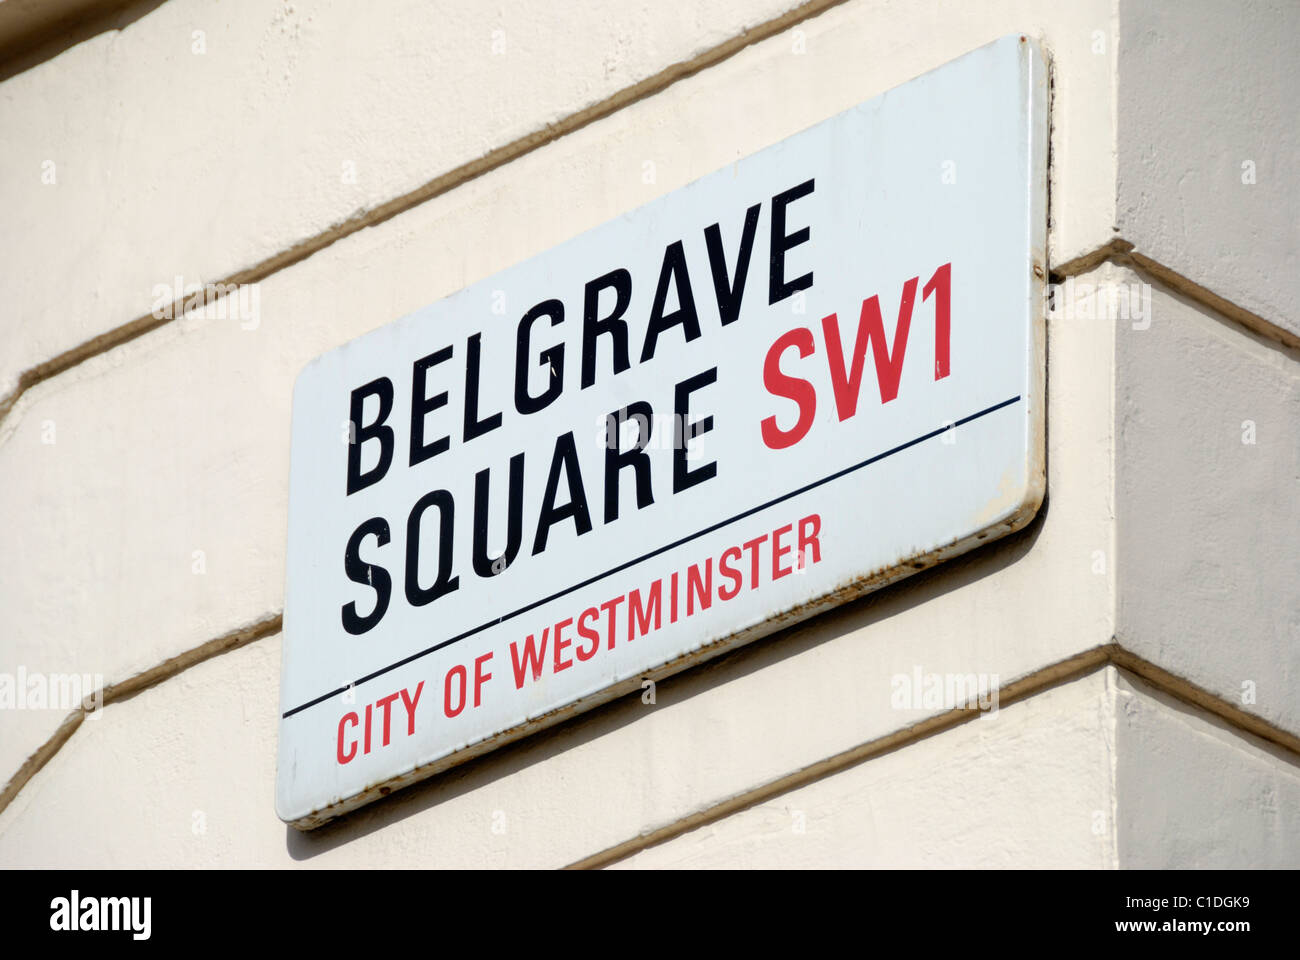 Belgrave Square SW1 Straßenschild, London, England Stockfoto